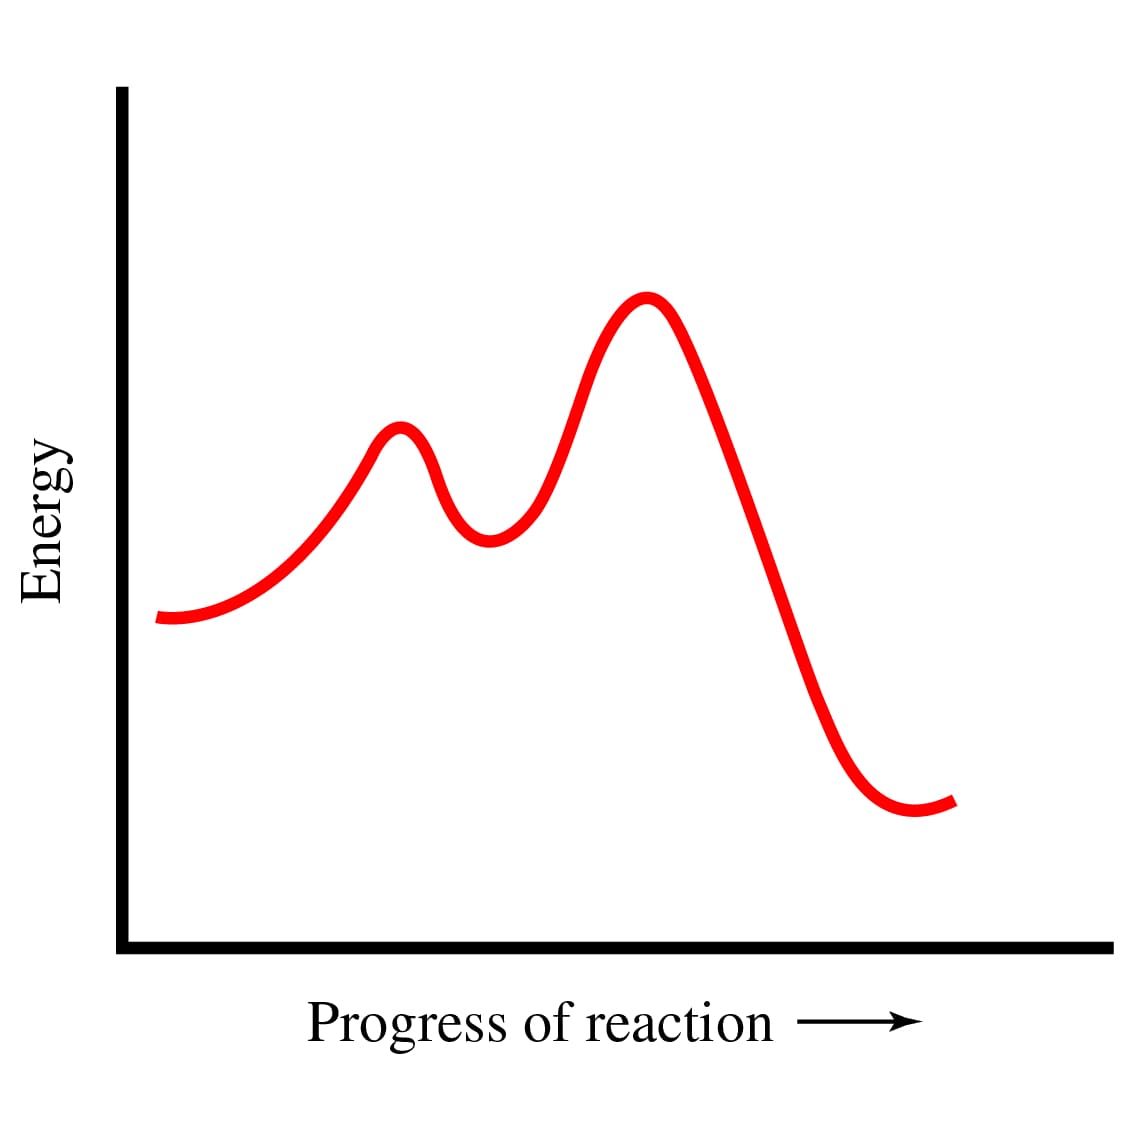 Progress of reaction
Energy
